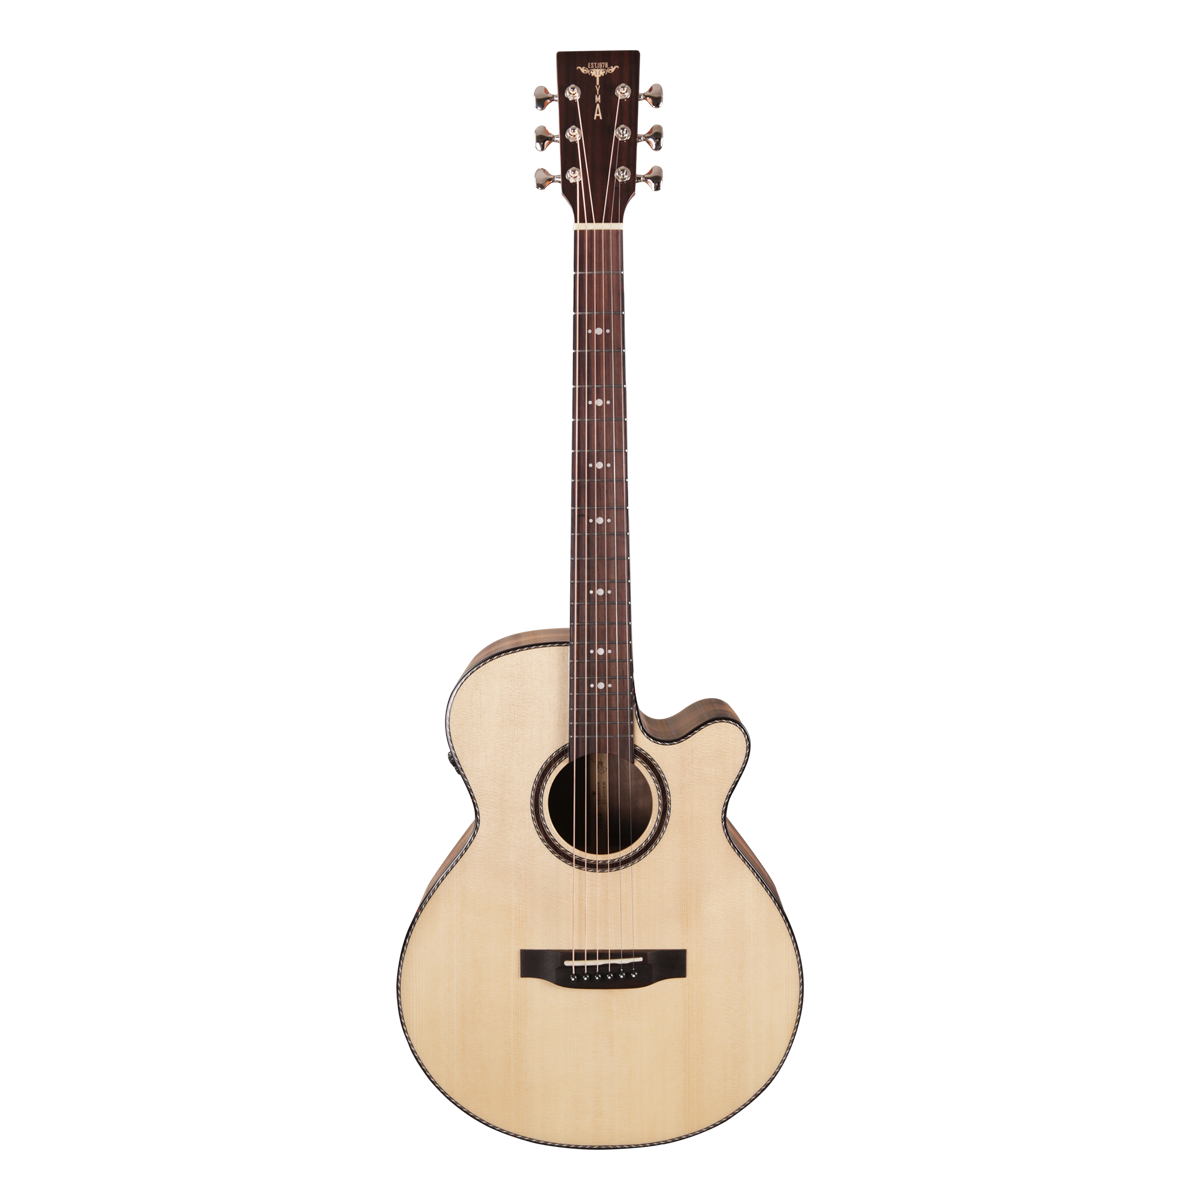 Tyma A2 Custom ZL трансакустическая гитара в комплекте с аксессуарами